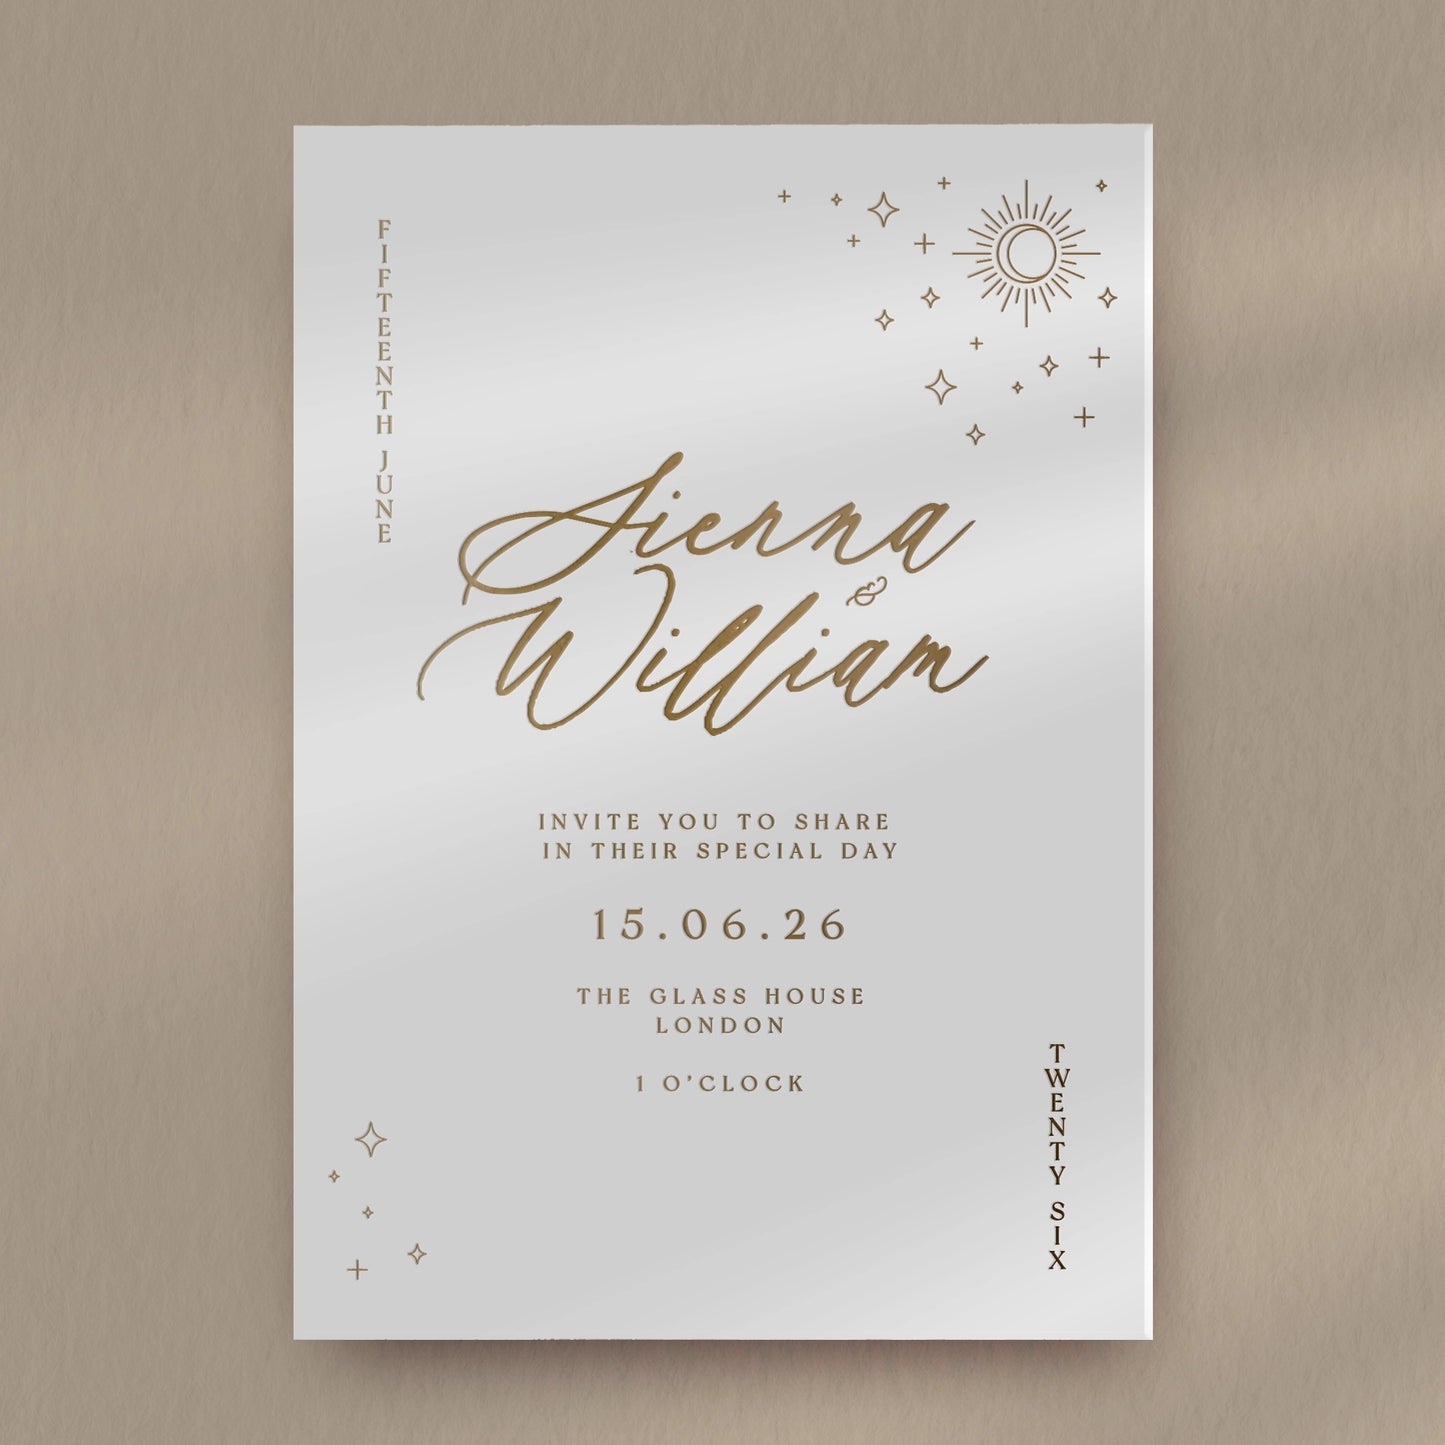 Day Invitation Sample  Ivy and Gold Wedding Stationery Sienna  